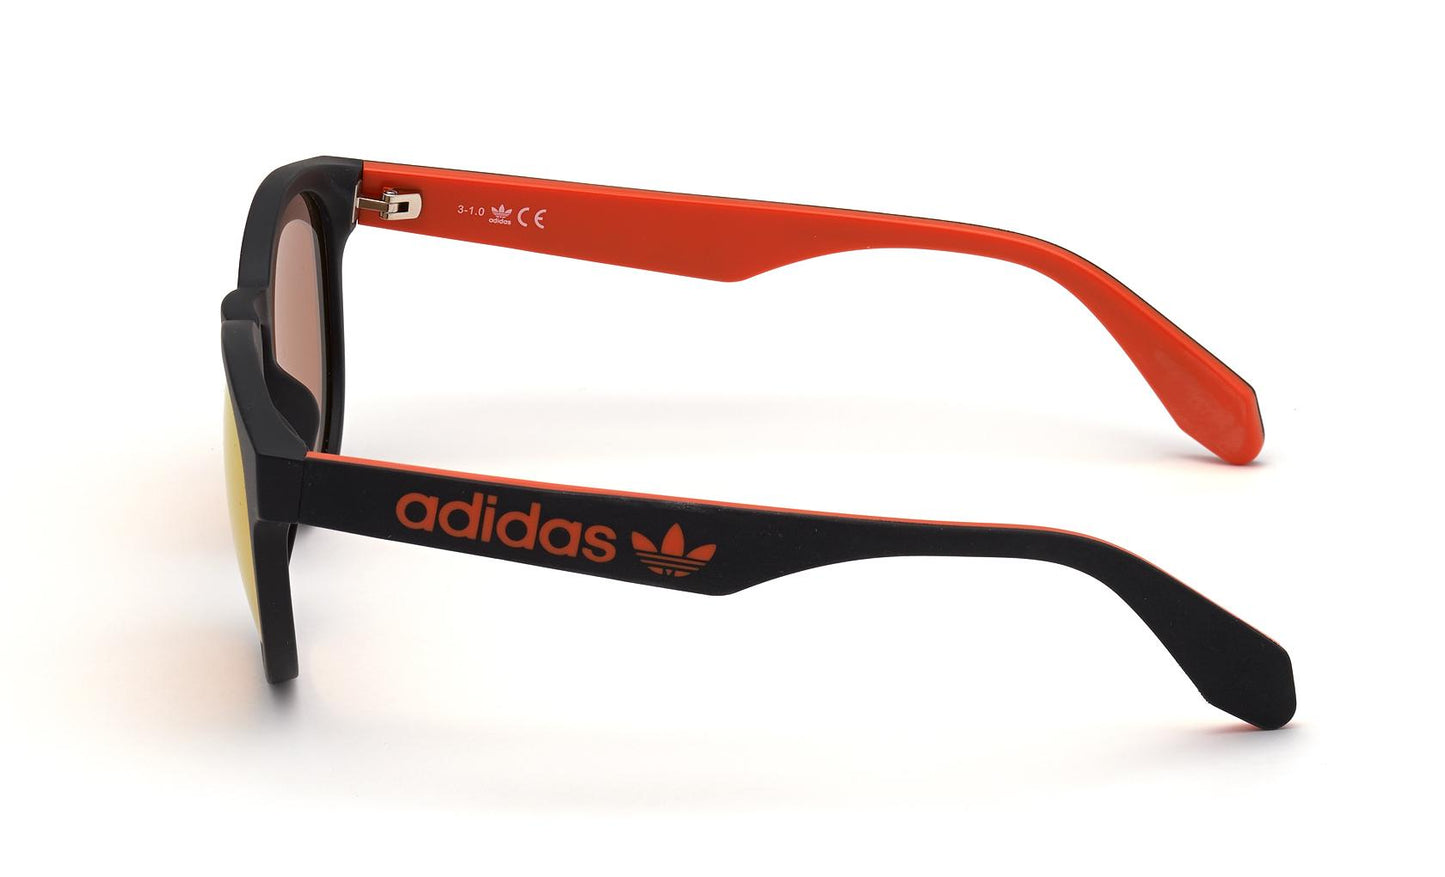 Adidas Originals Sunglasses OR0025 02U